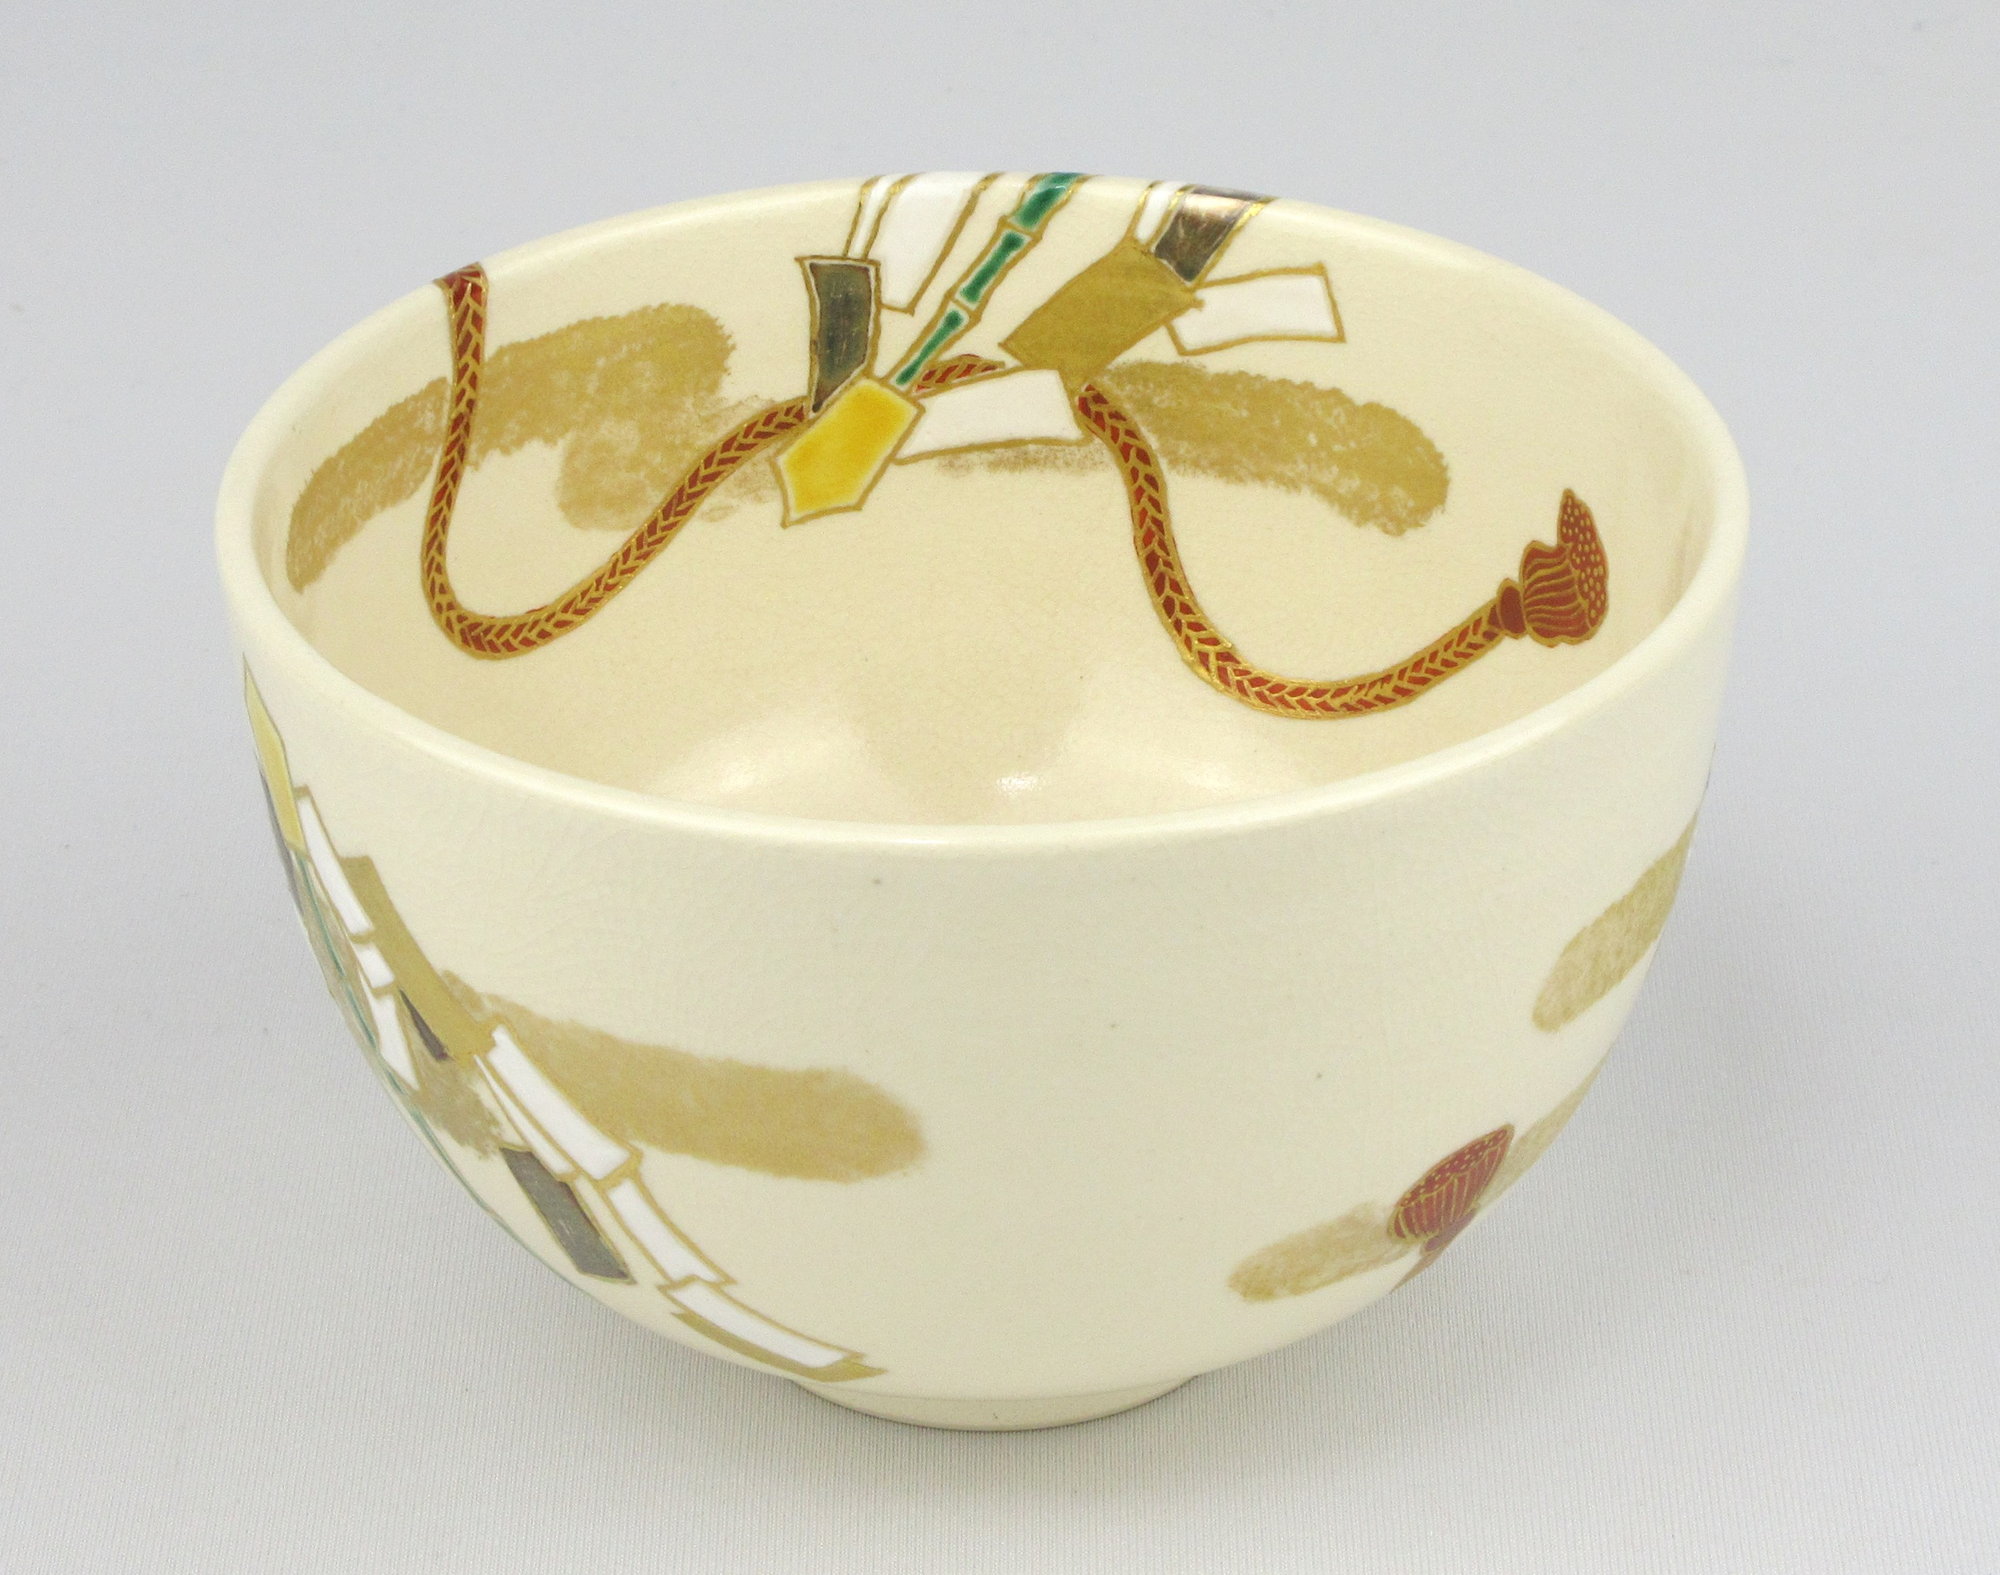 茶道具 茶碗 西村徳泉 赤絵竜紋 茶碗赤絵竜文の茶碗です - 陶芸